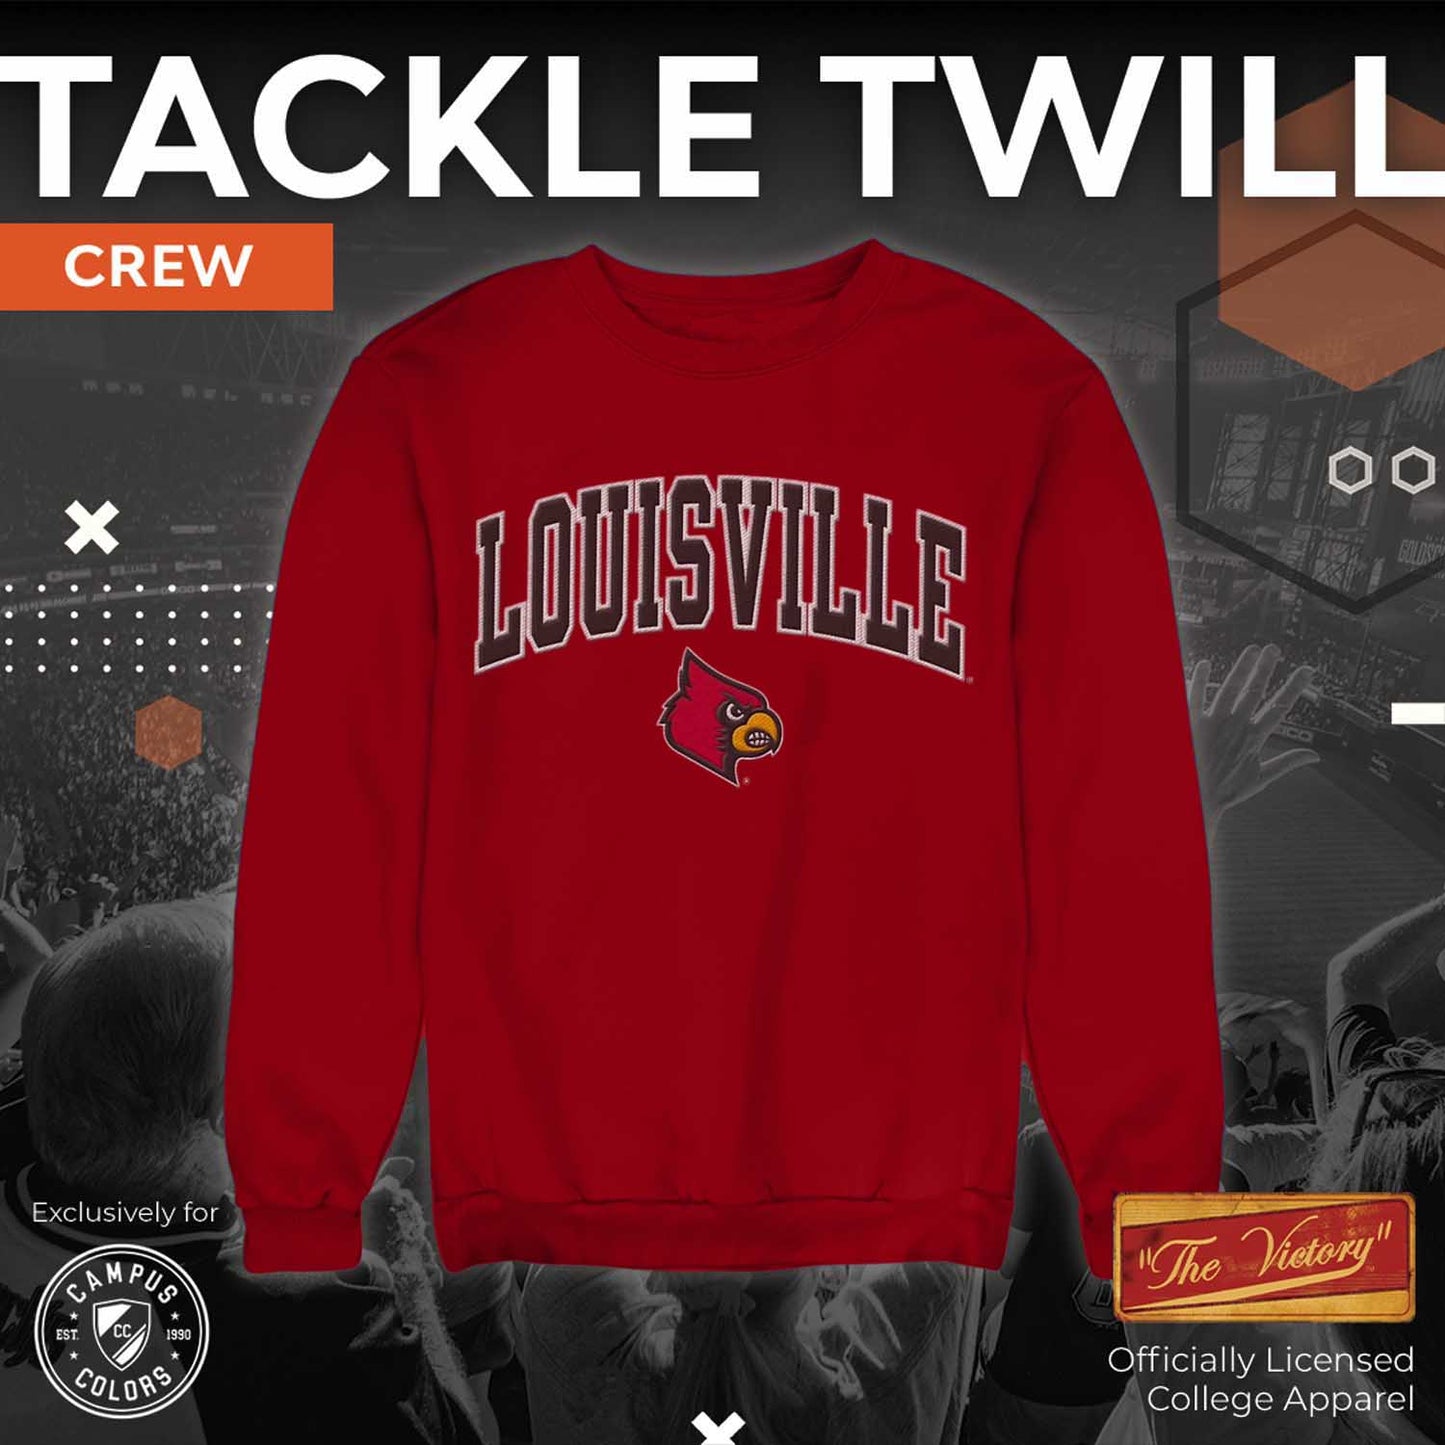 Louisville Cardinals NCAA Adult Tackle Twill Crewneck Sweatshirt - Red